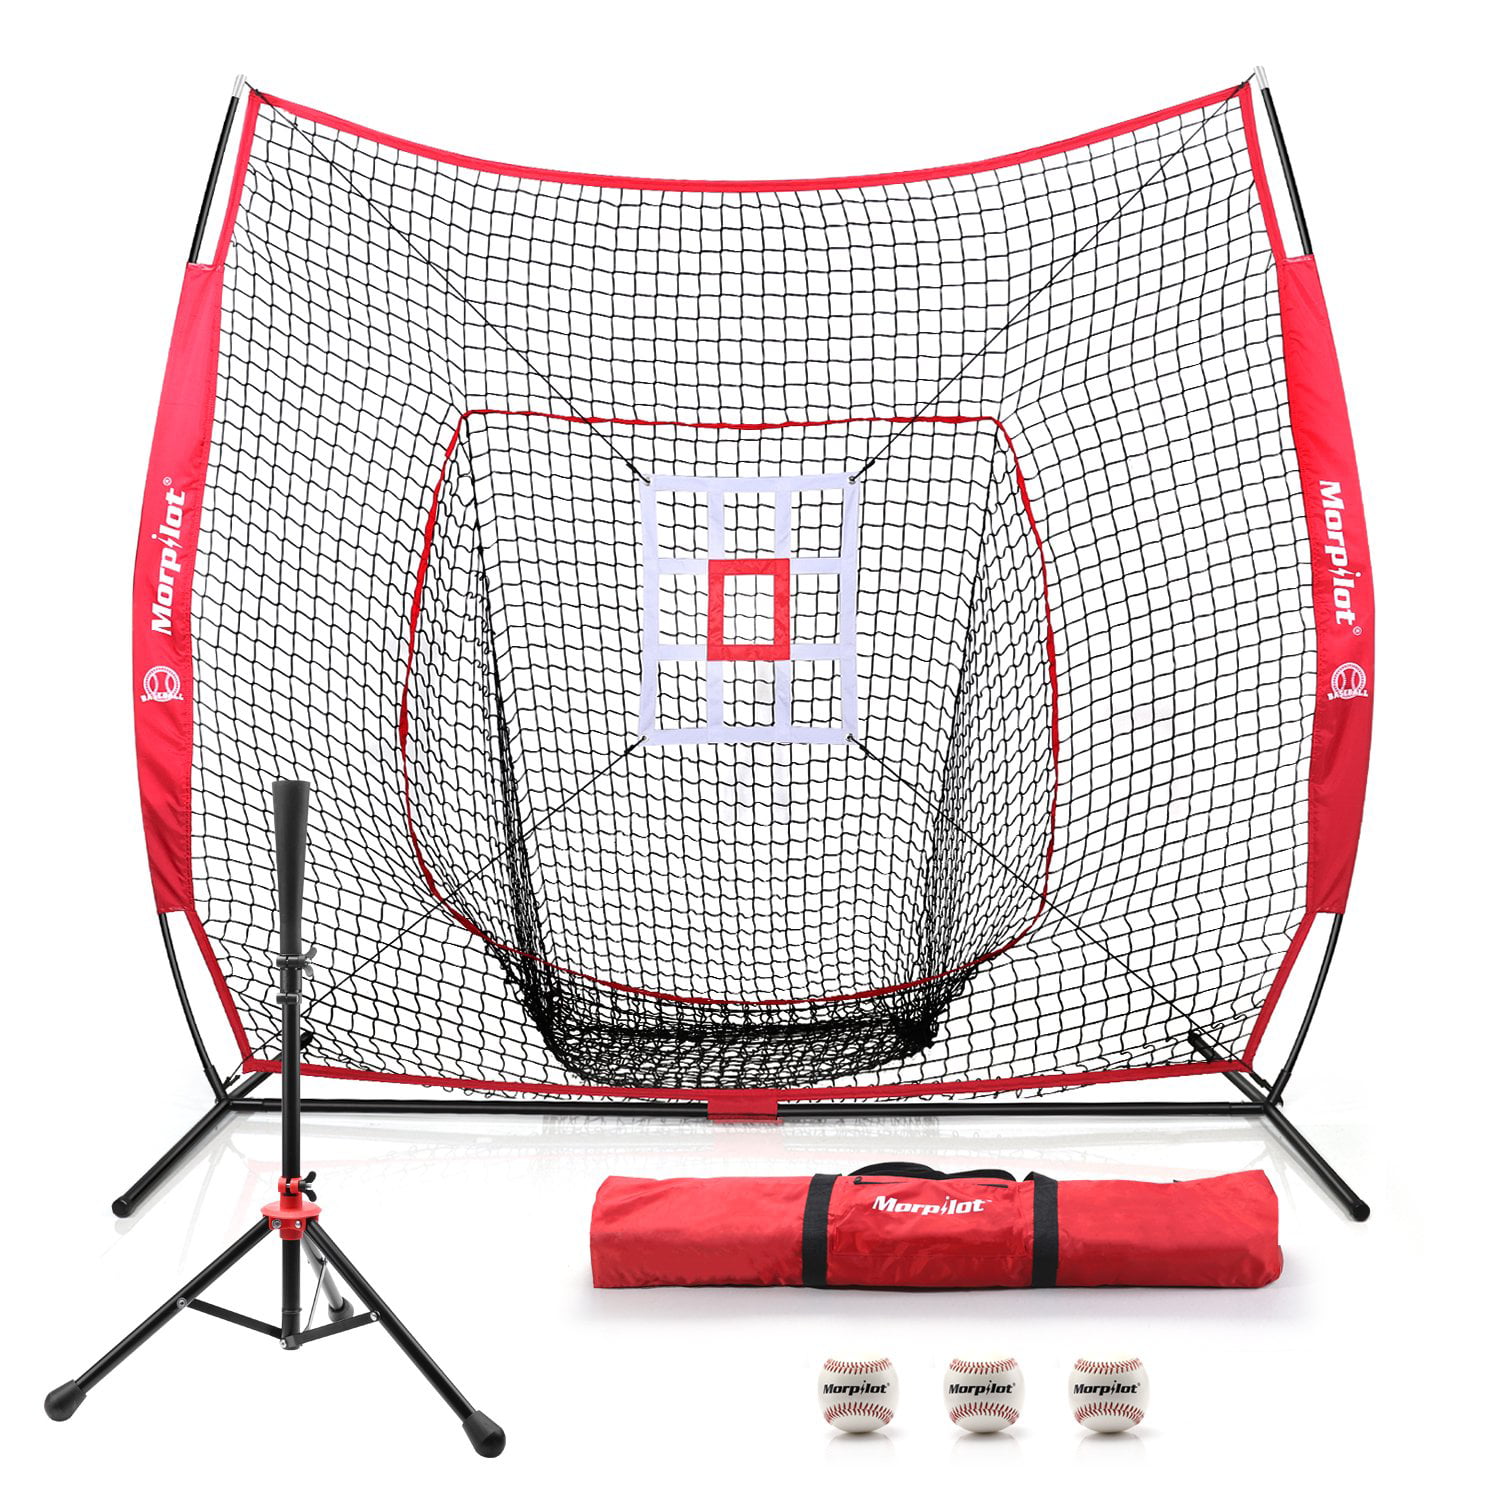 7'×7' Baseball & Softball Practice Net Strike Zone Training Aid W/ Carry Bag 